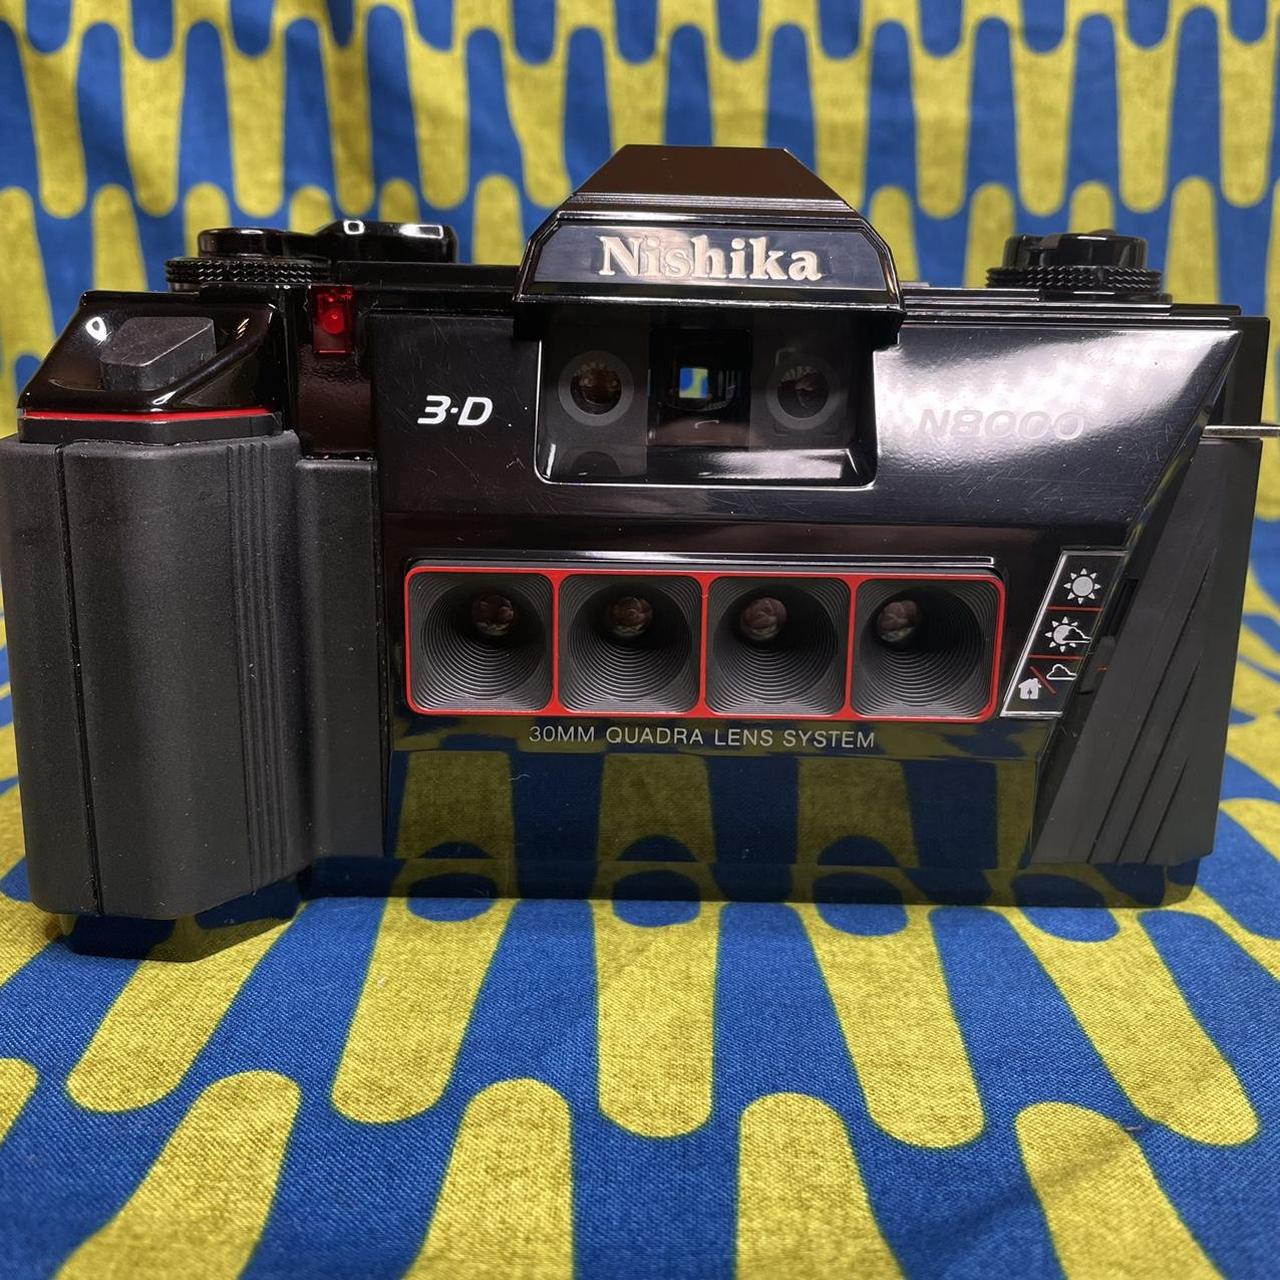 Product Image 3 - Nishika N8000! Film tested! Comes